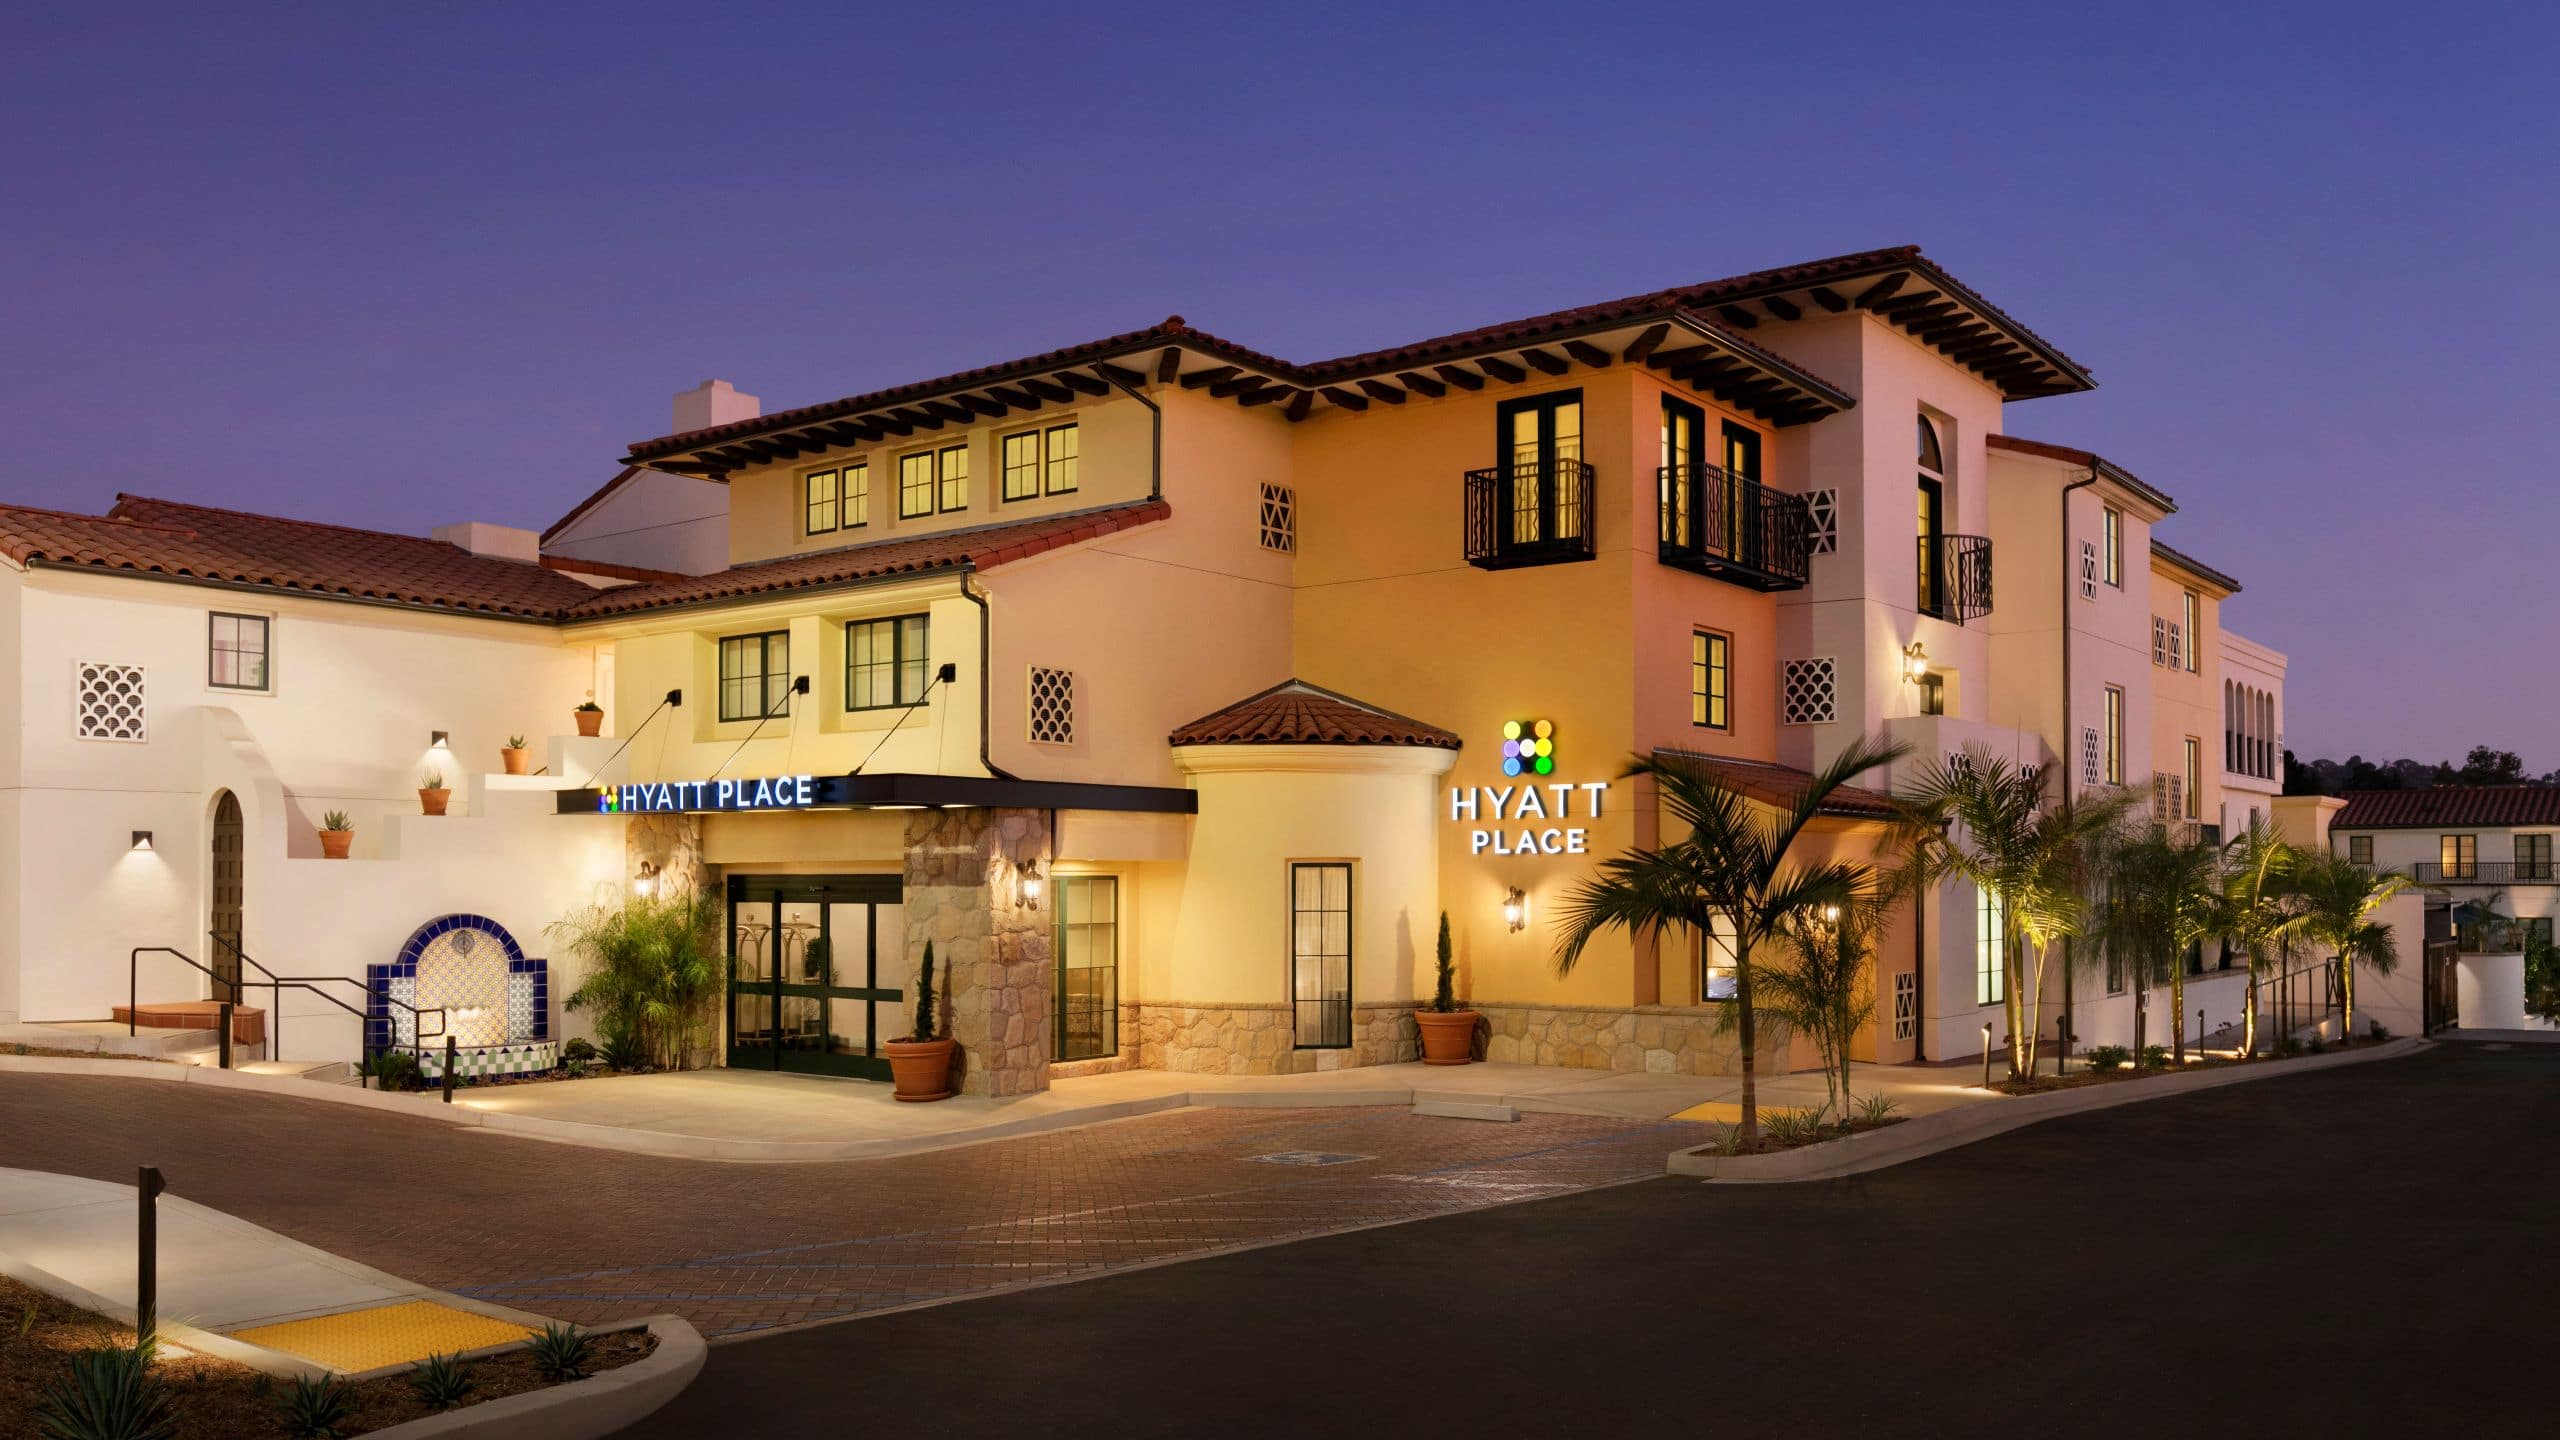 Santa Barbara Hotels Near the Beach